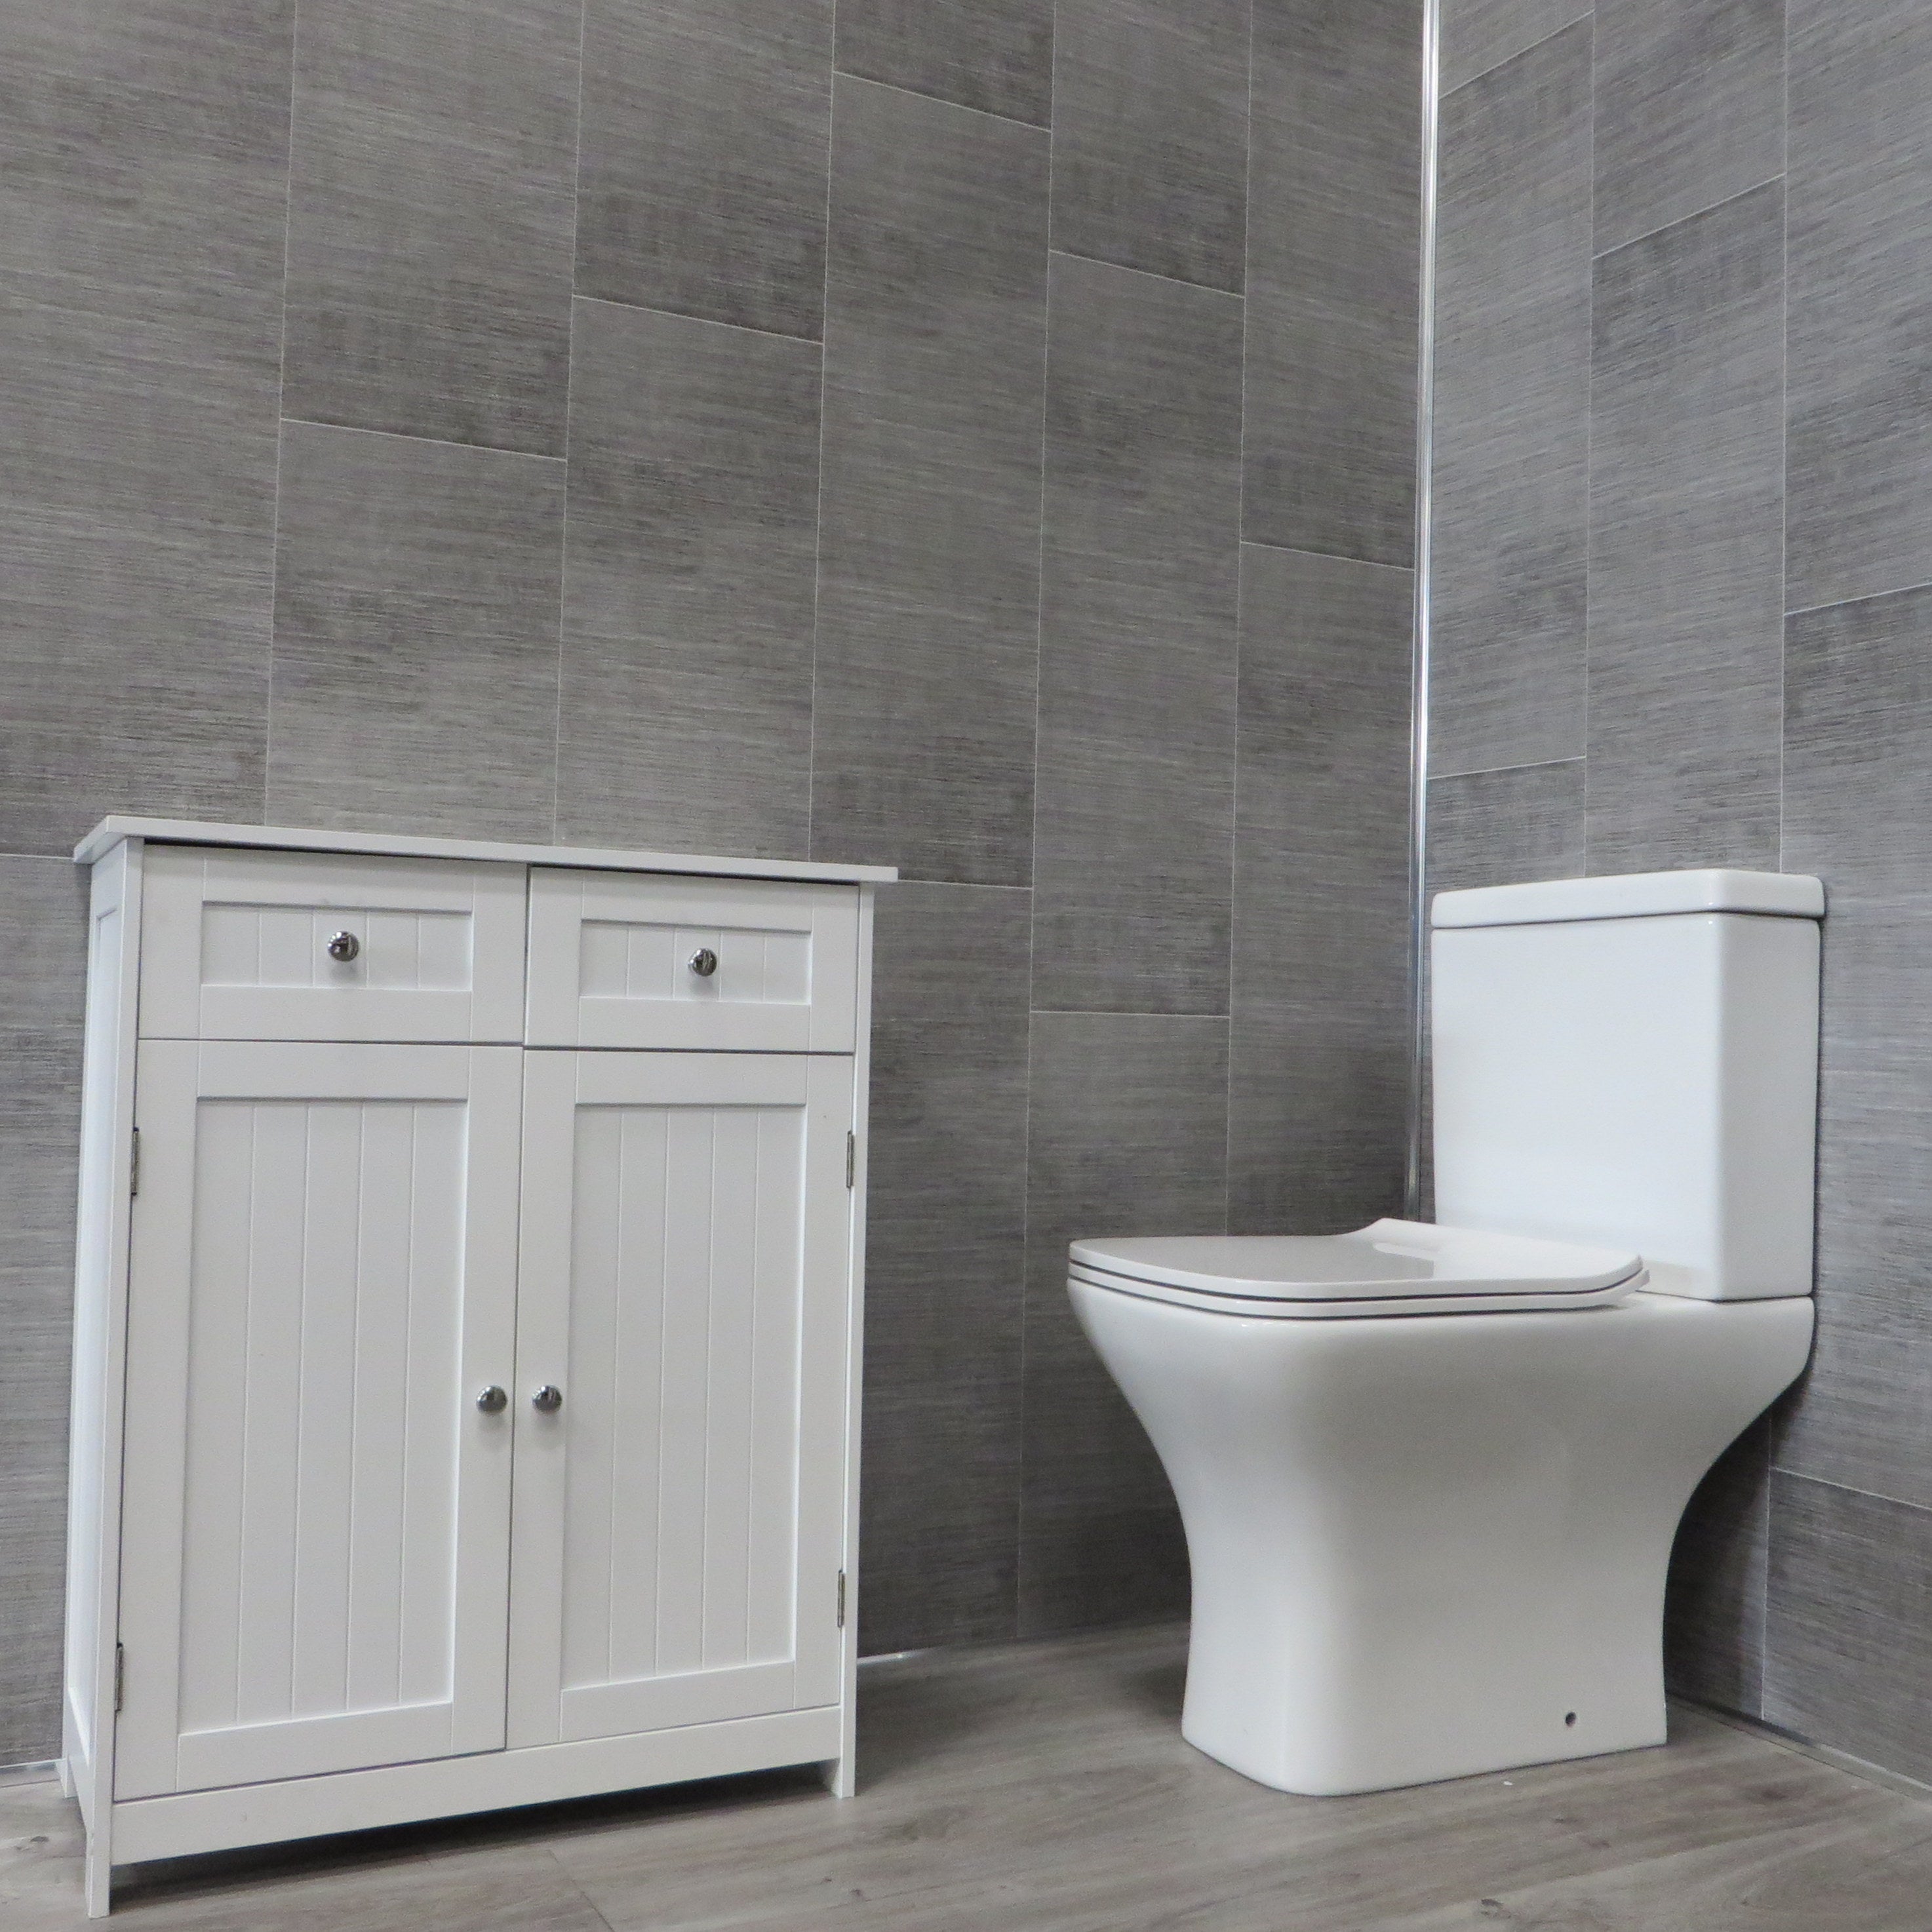 Sample of Dark Grey Large Tile 5mm Bathroom Cladding PVC Wall Panels